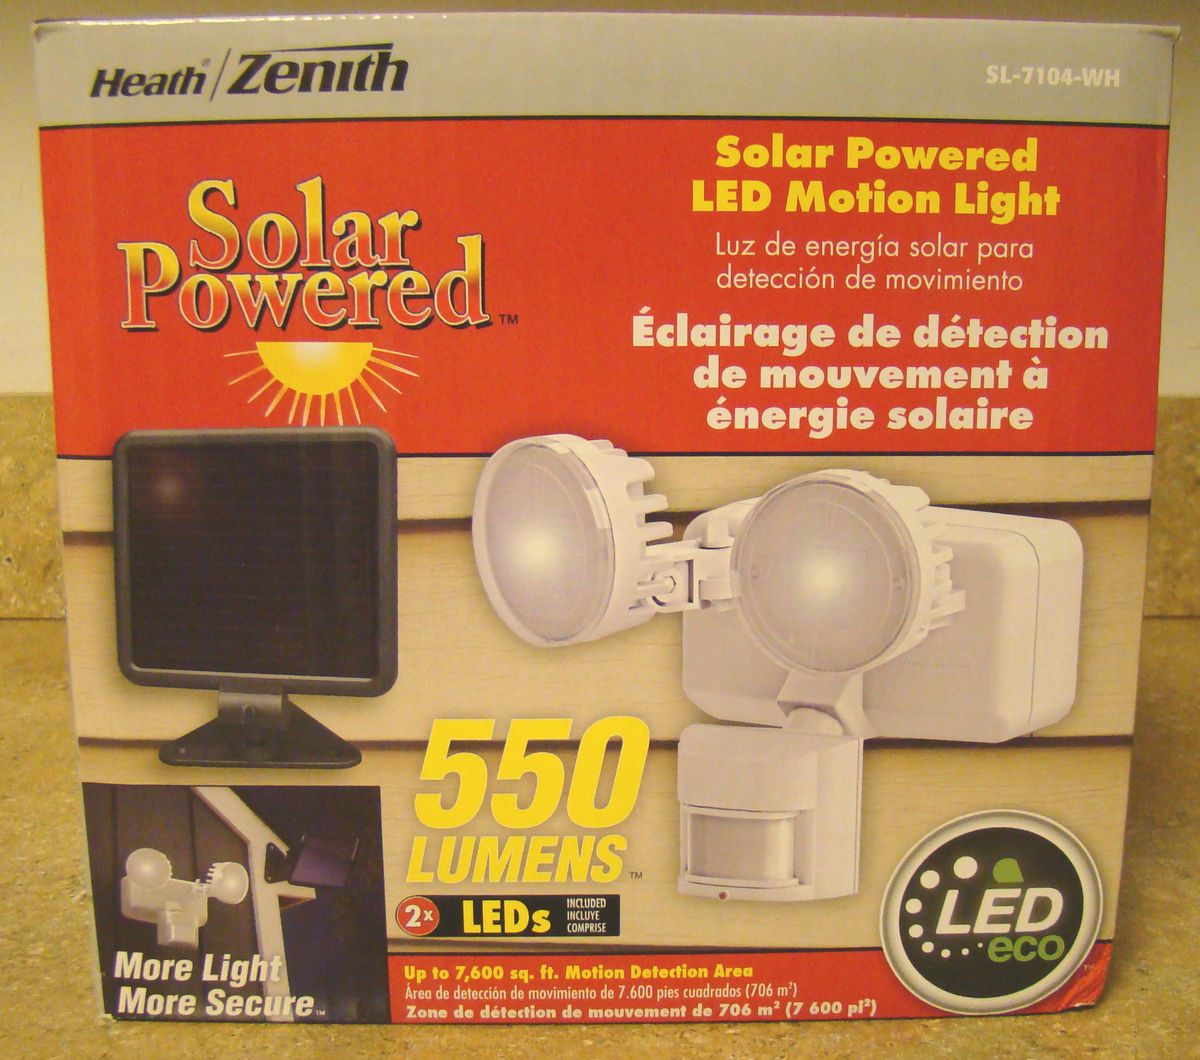 HEATH ZENITH SL 7104 WH 2 LIGHT SOLAR POWERED MOTION SENSOR SECURITY